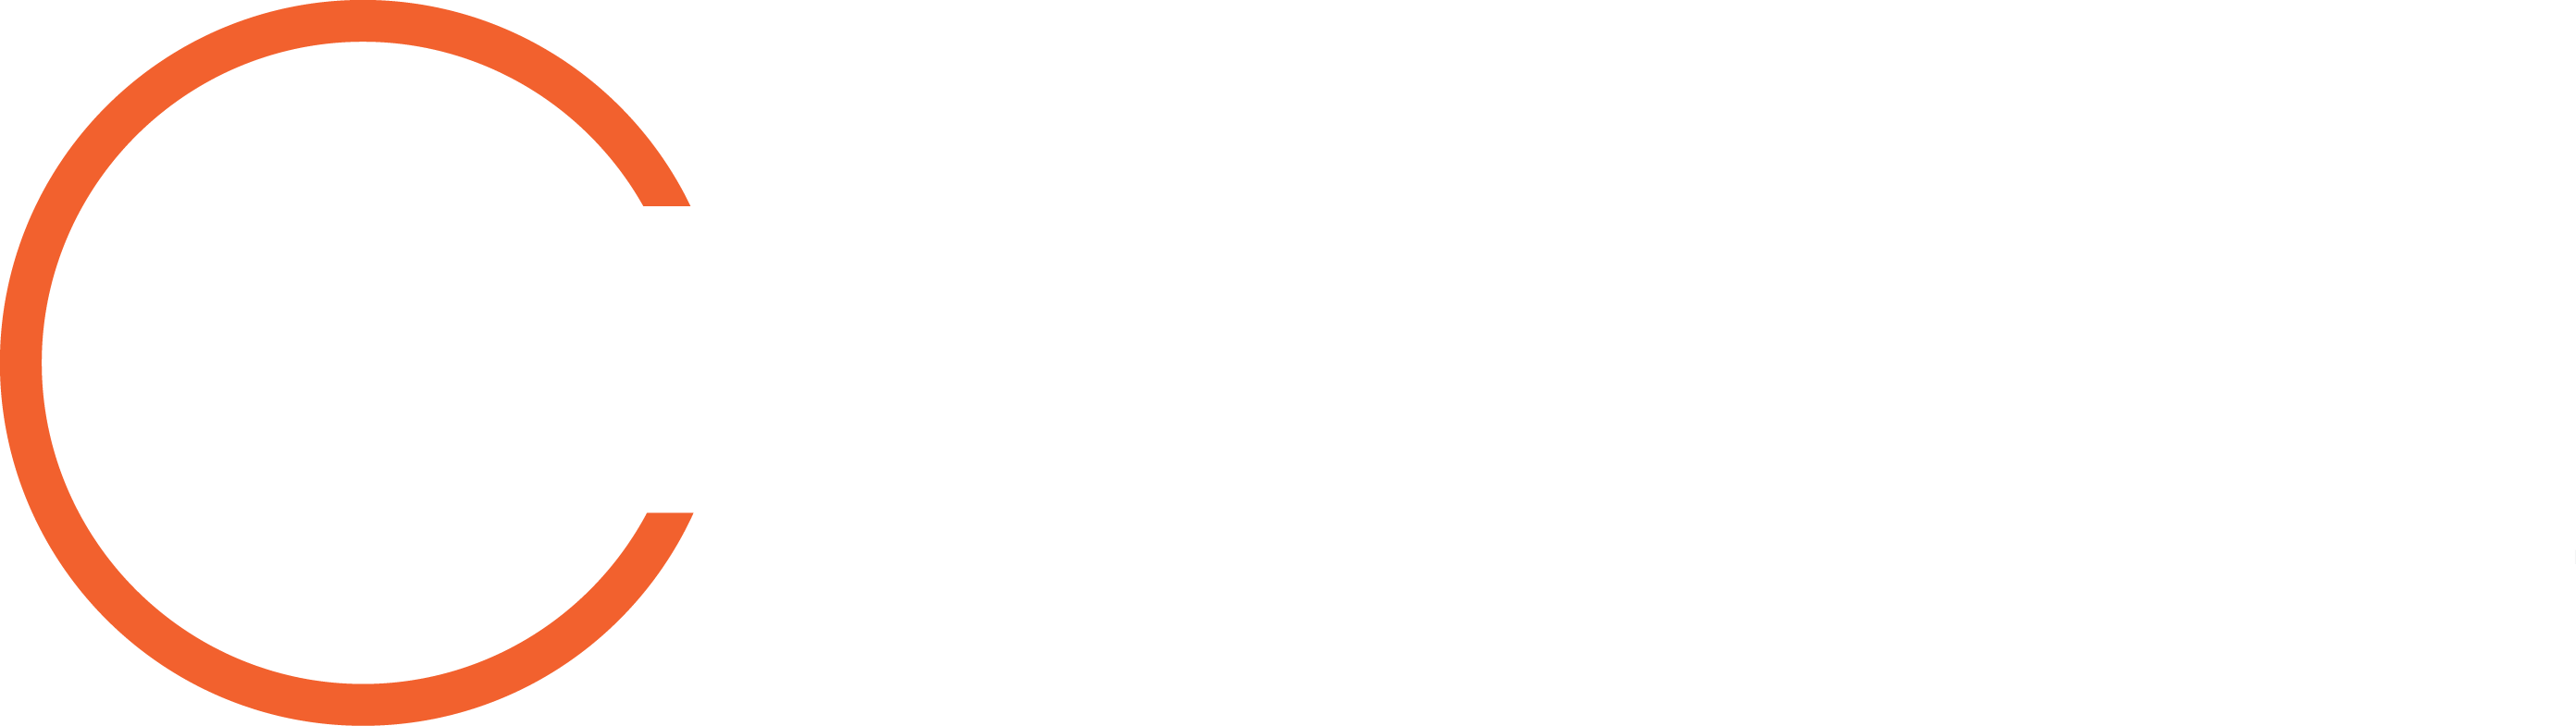 Béringer